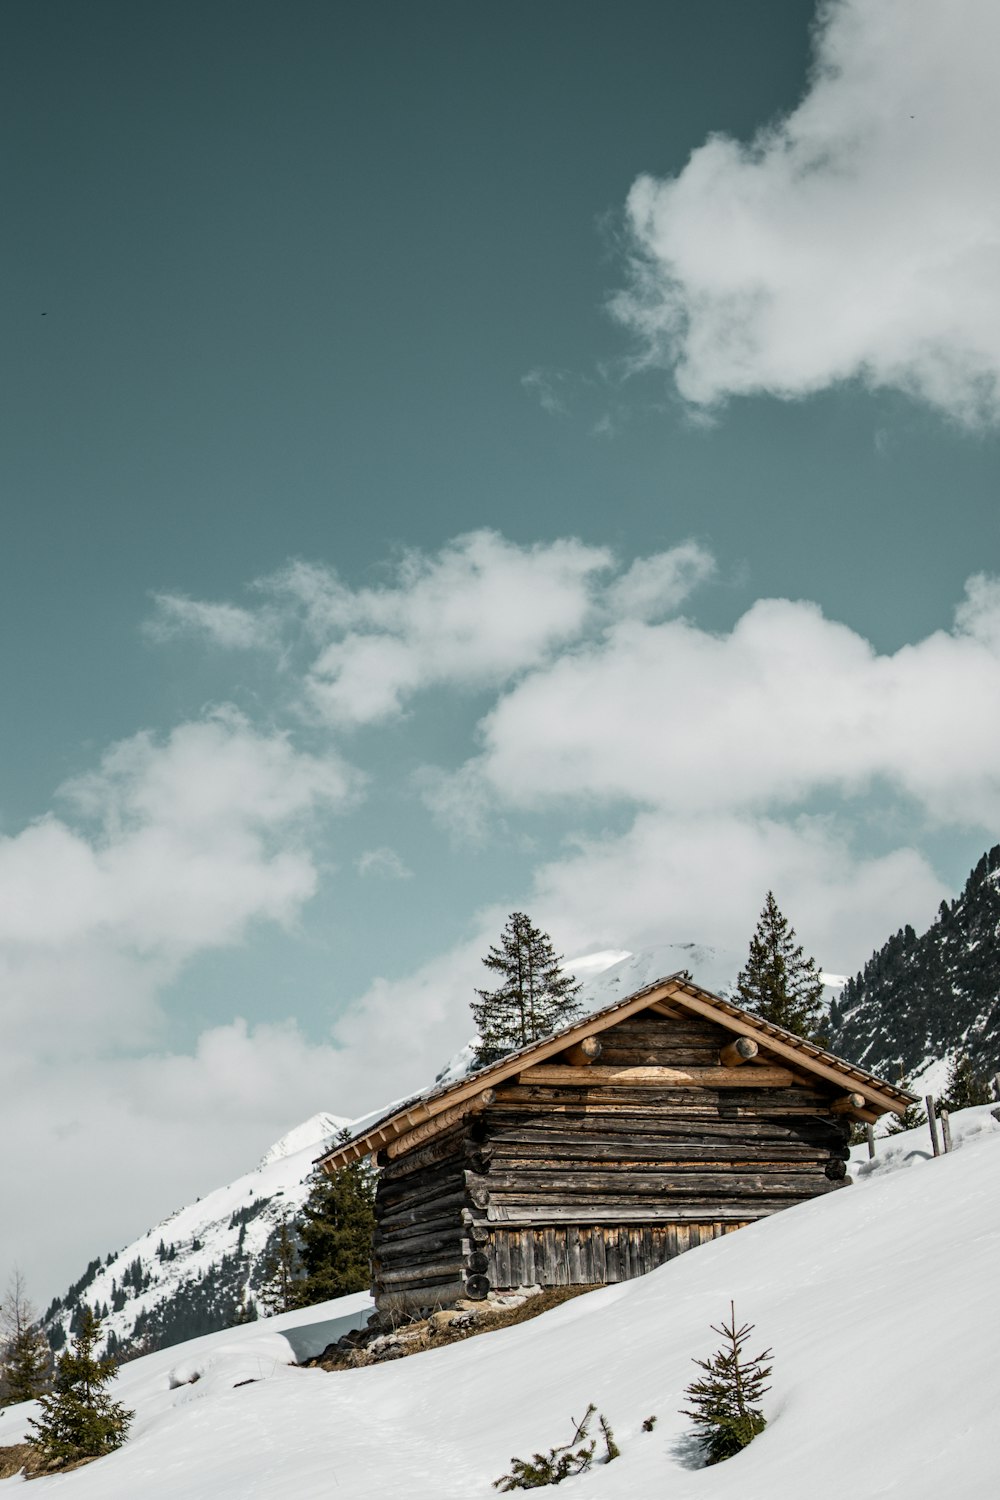 a log cabin on a snowy mountain under a cloudy sky